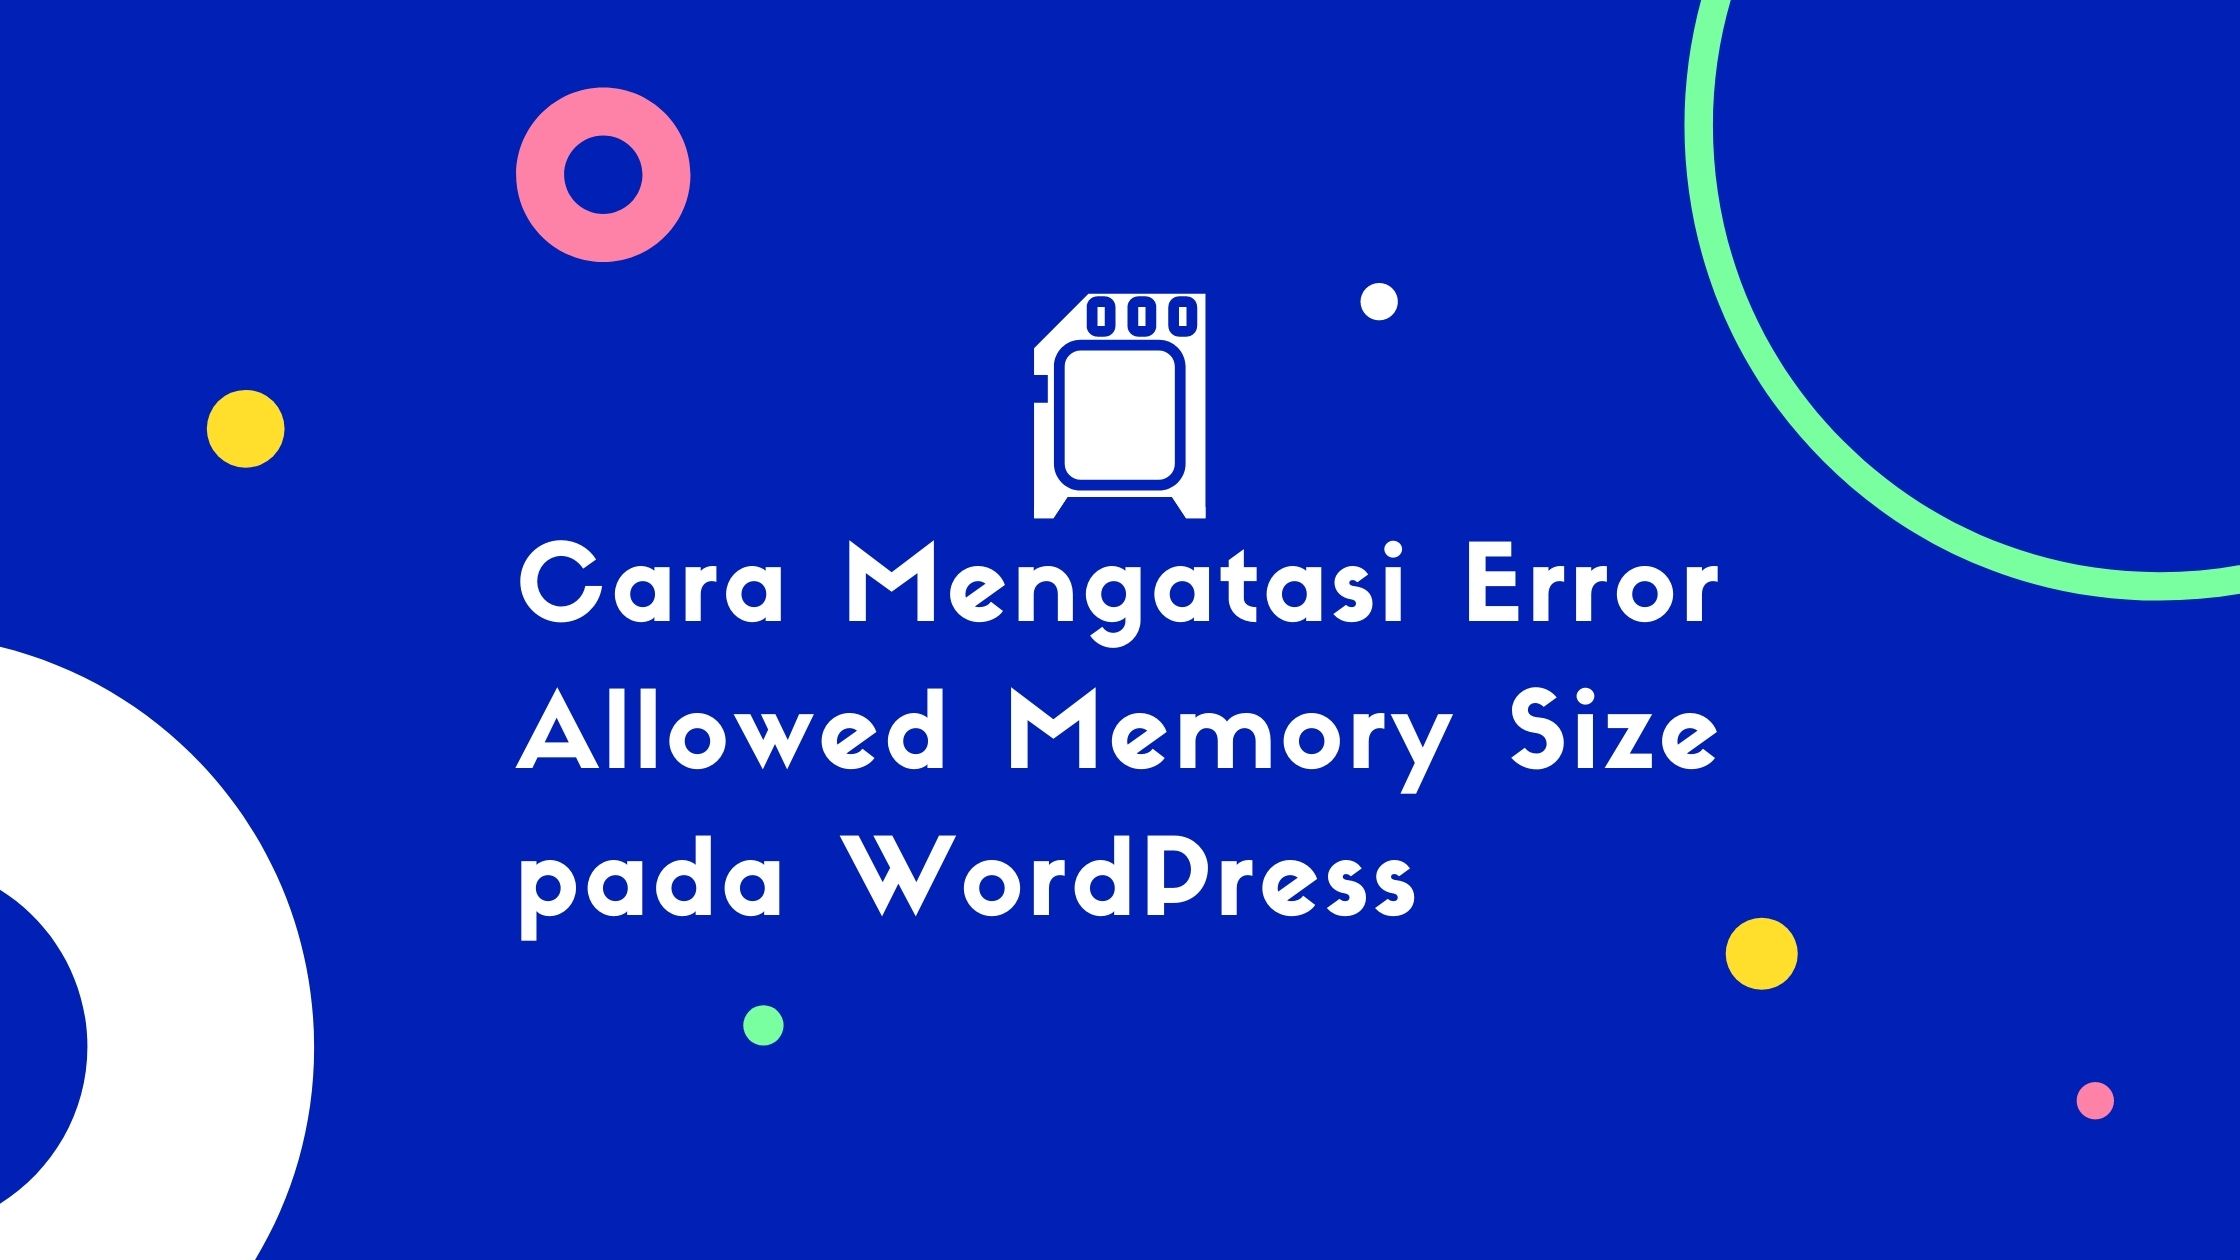 Cara Mengatasi Error Allowed Memory Size pada WordPress Cara Mengatasi Error Allowed Memory Size pada WordPress